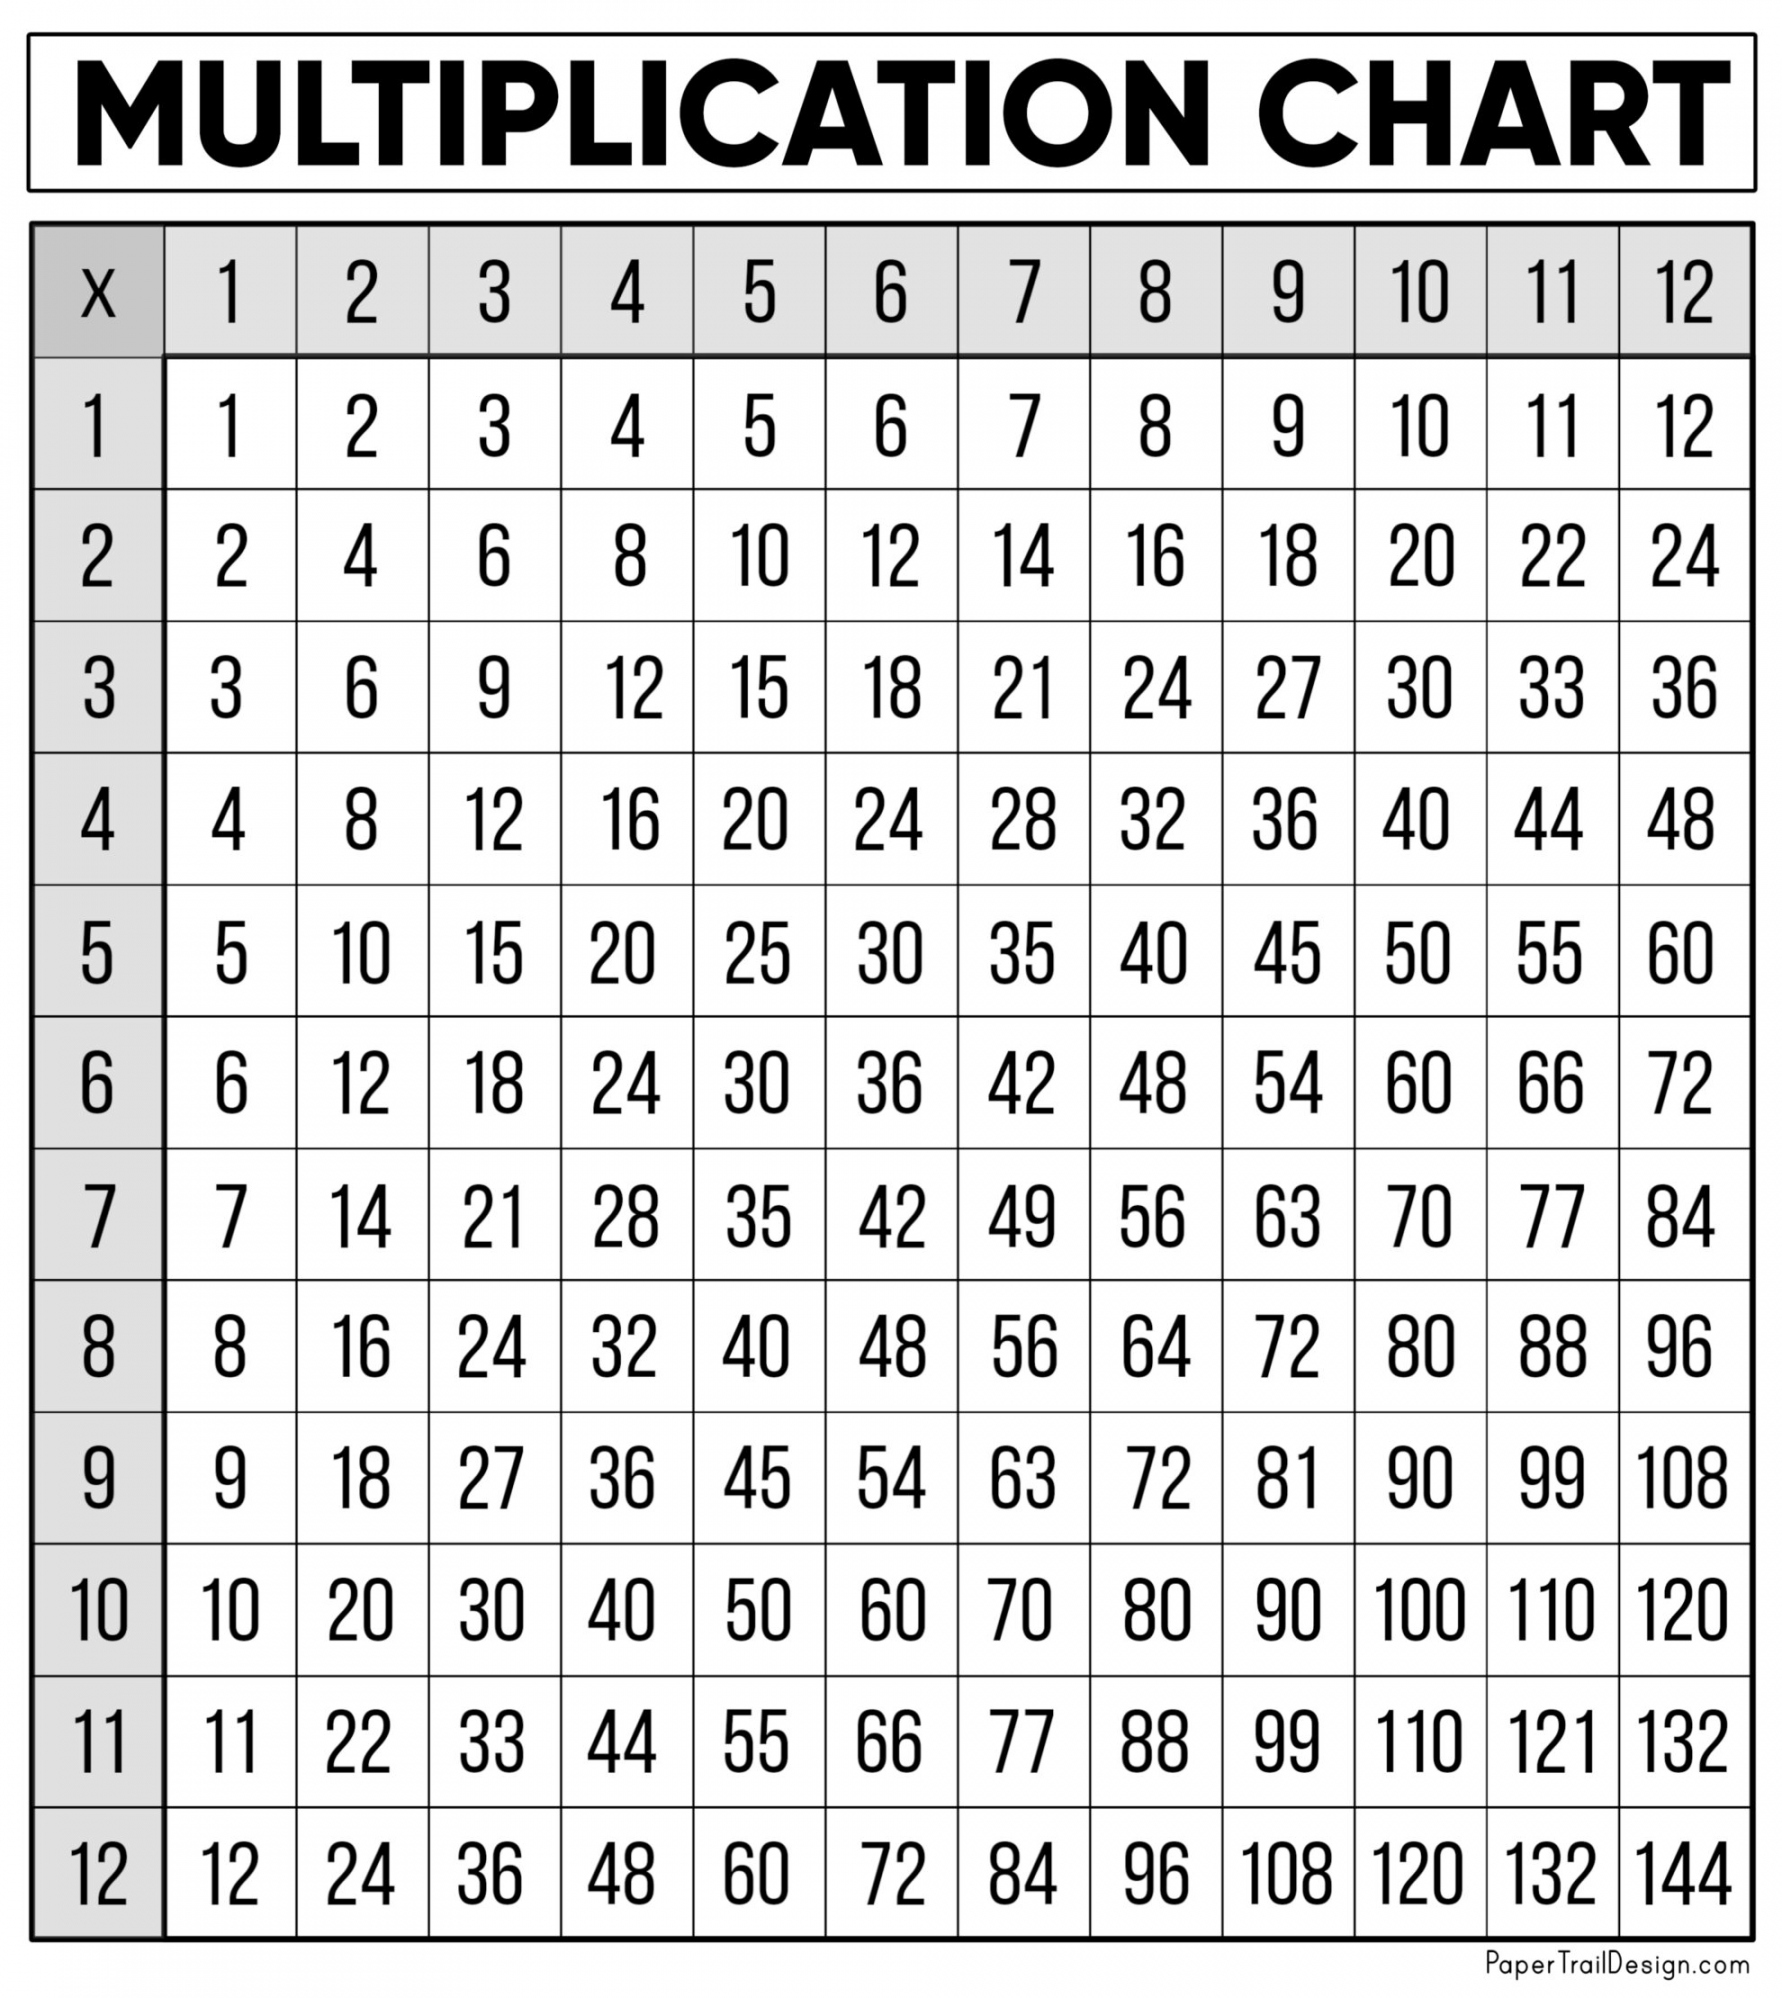 Free Printable Times Table Chart - Printable - Free Multiplication Chart Printable - Paper Trail Design